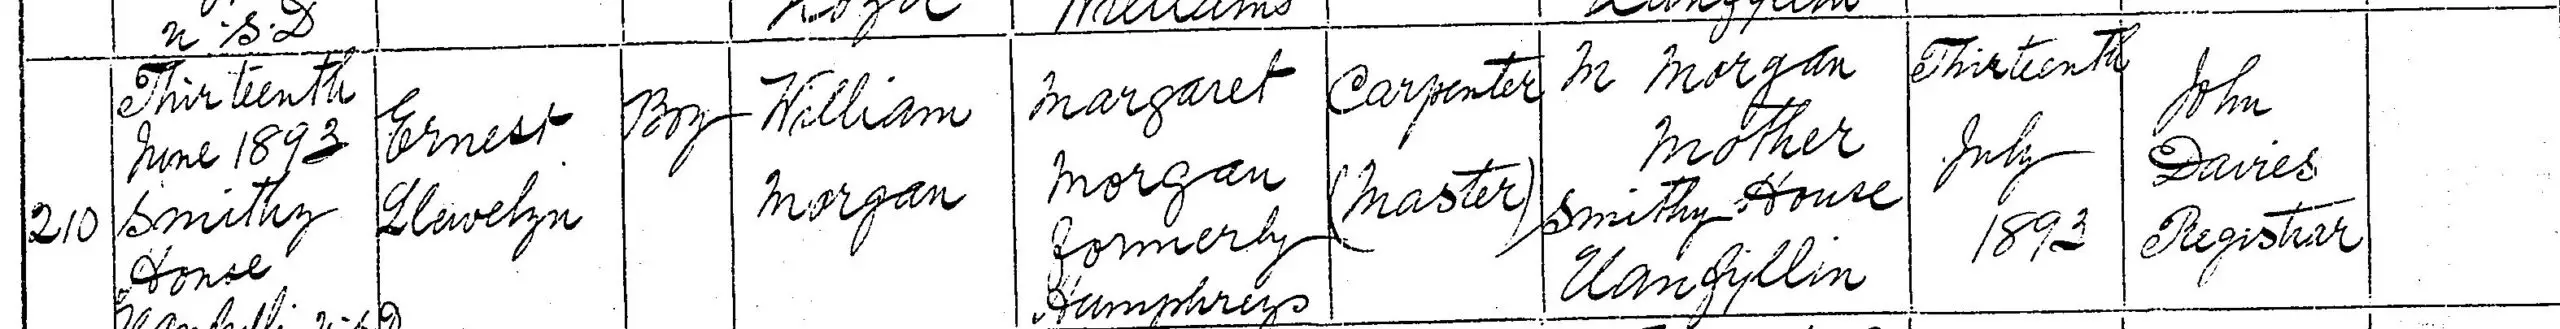 Birth Record of Ernest Morgan